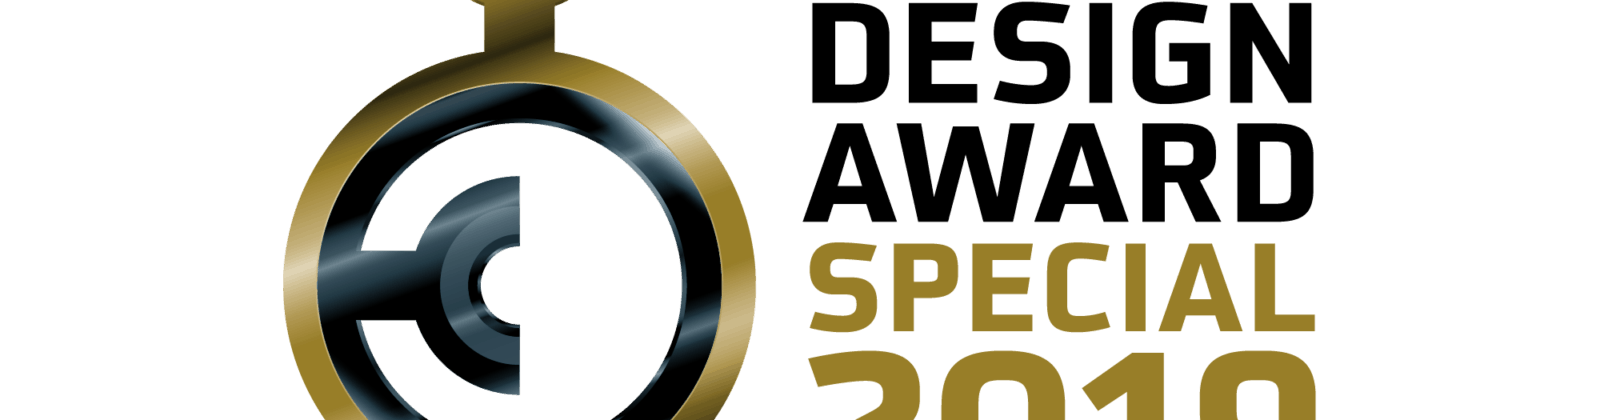 creedoo gewinnt German Design Award 2019